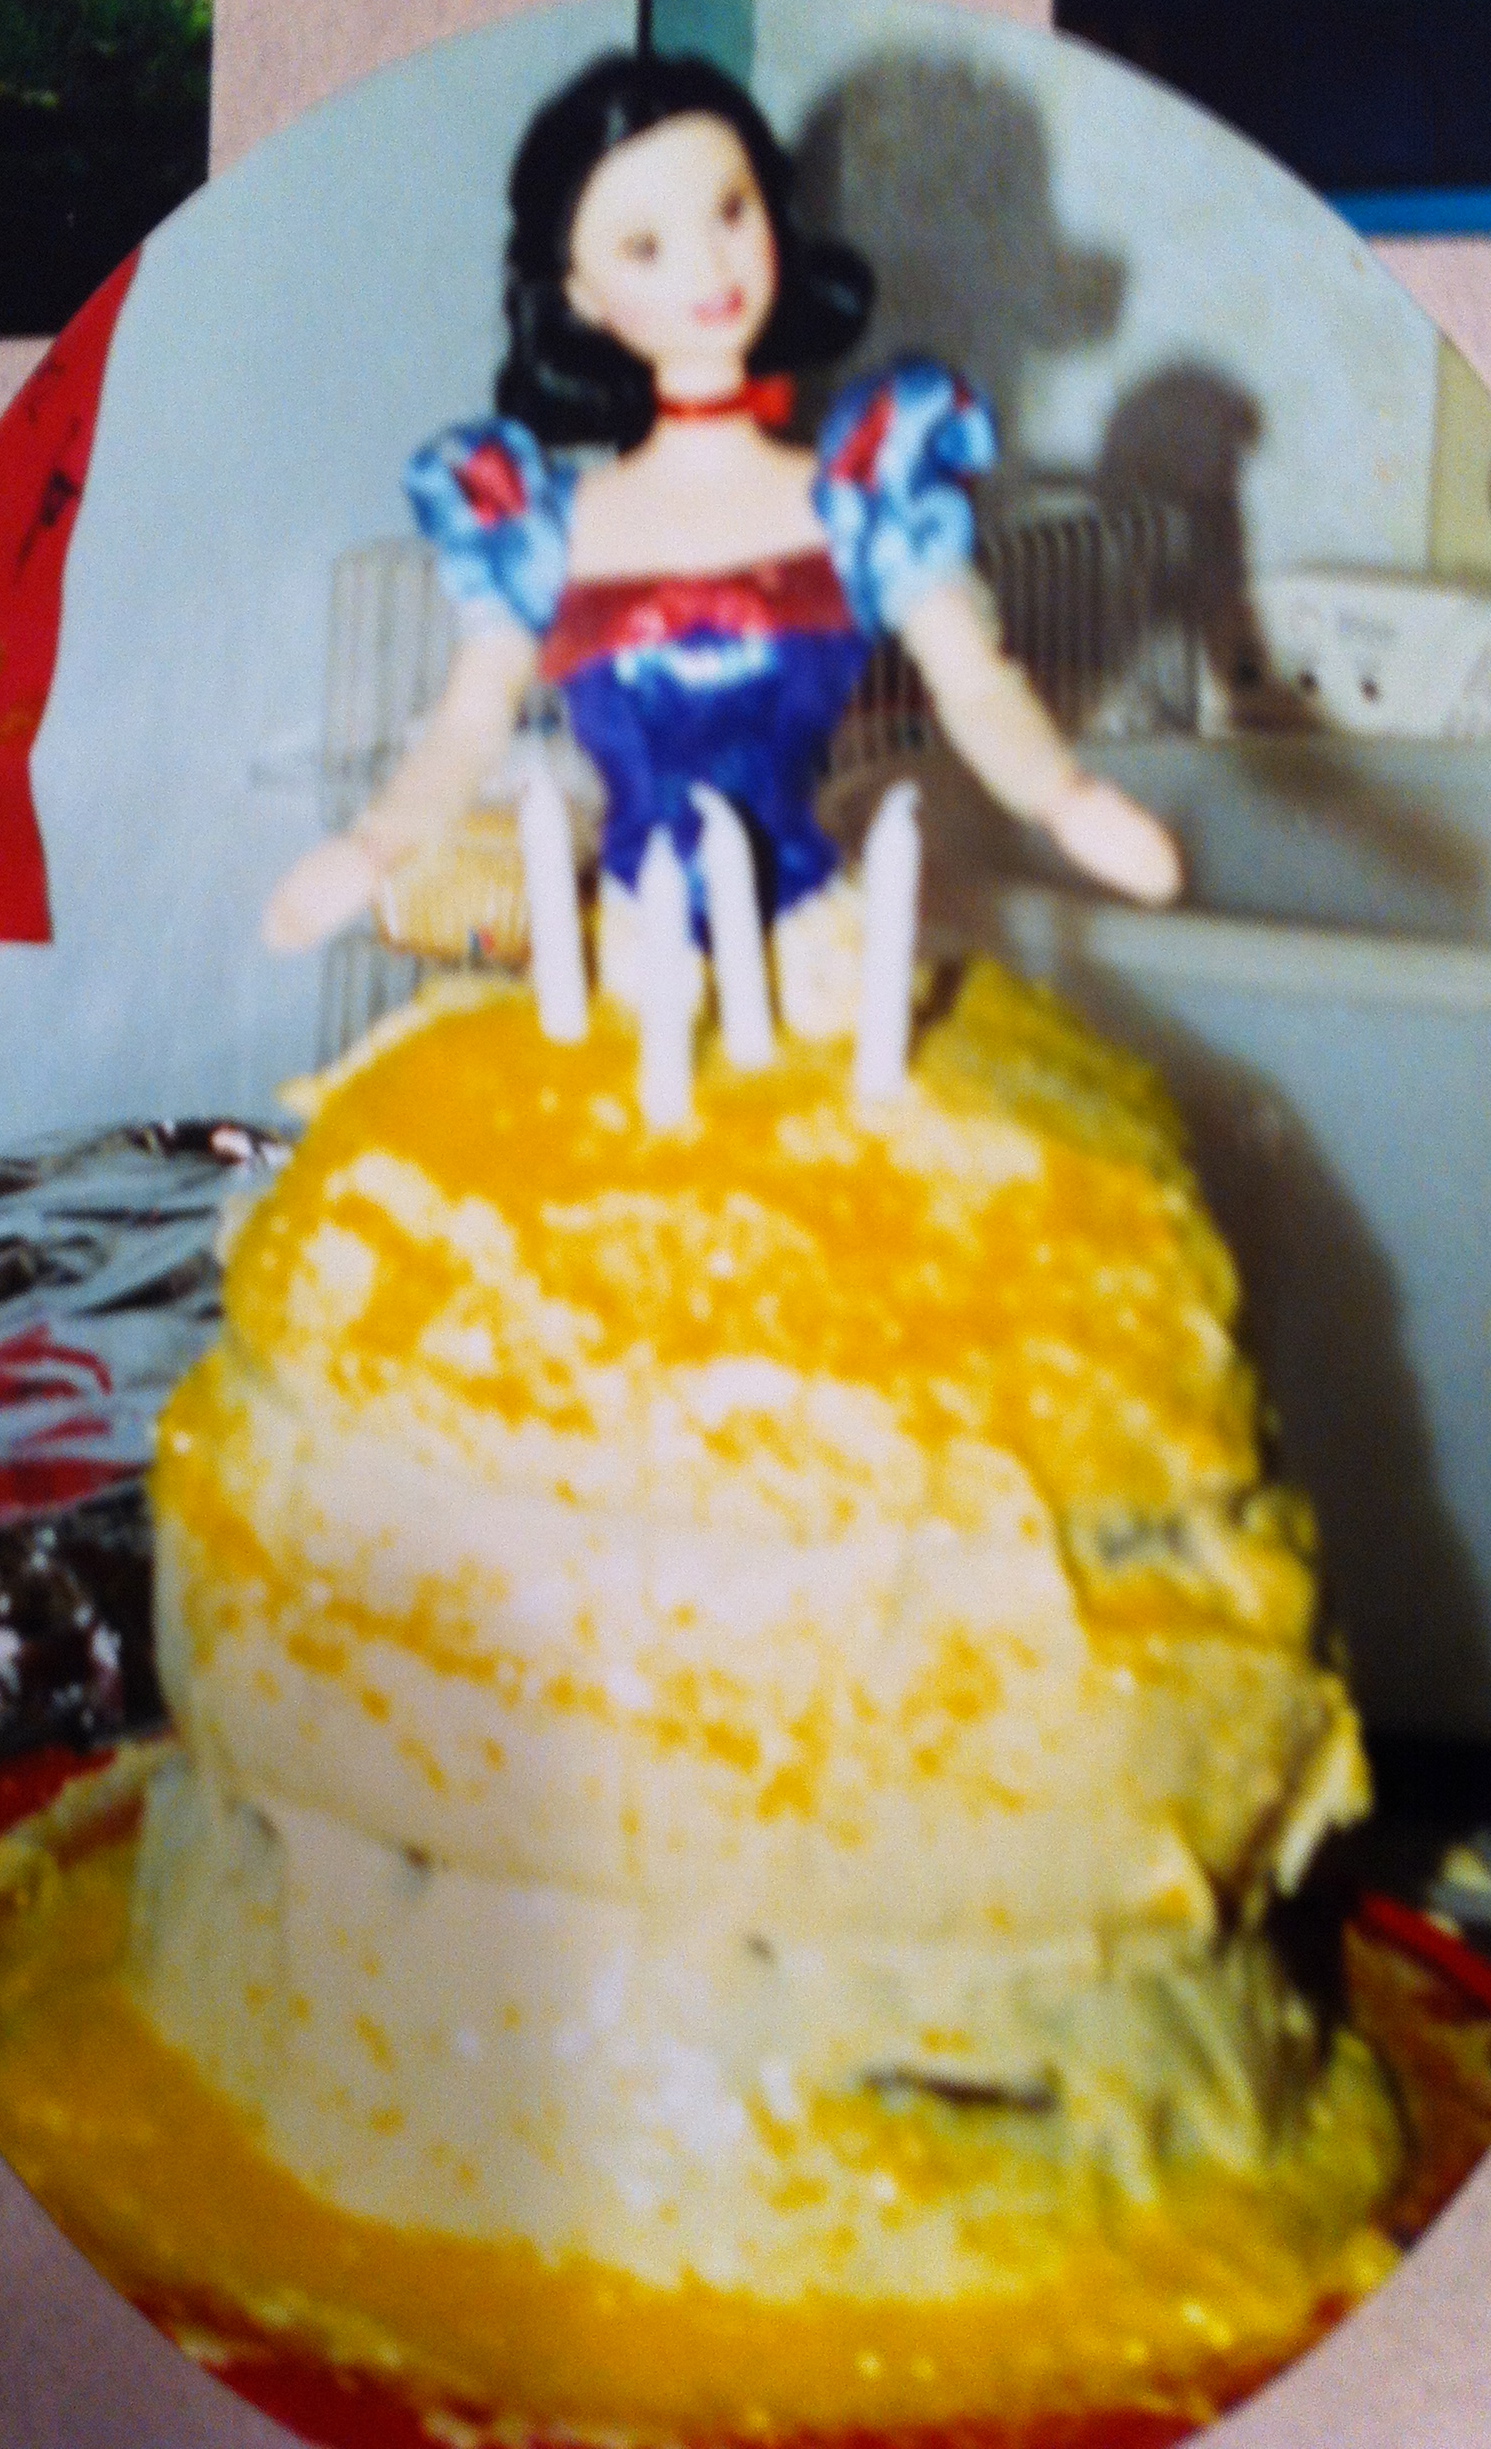 Birthday cake shaped like snow white